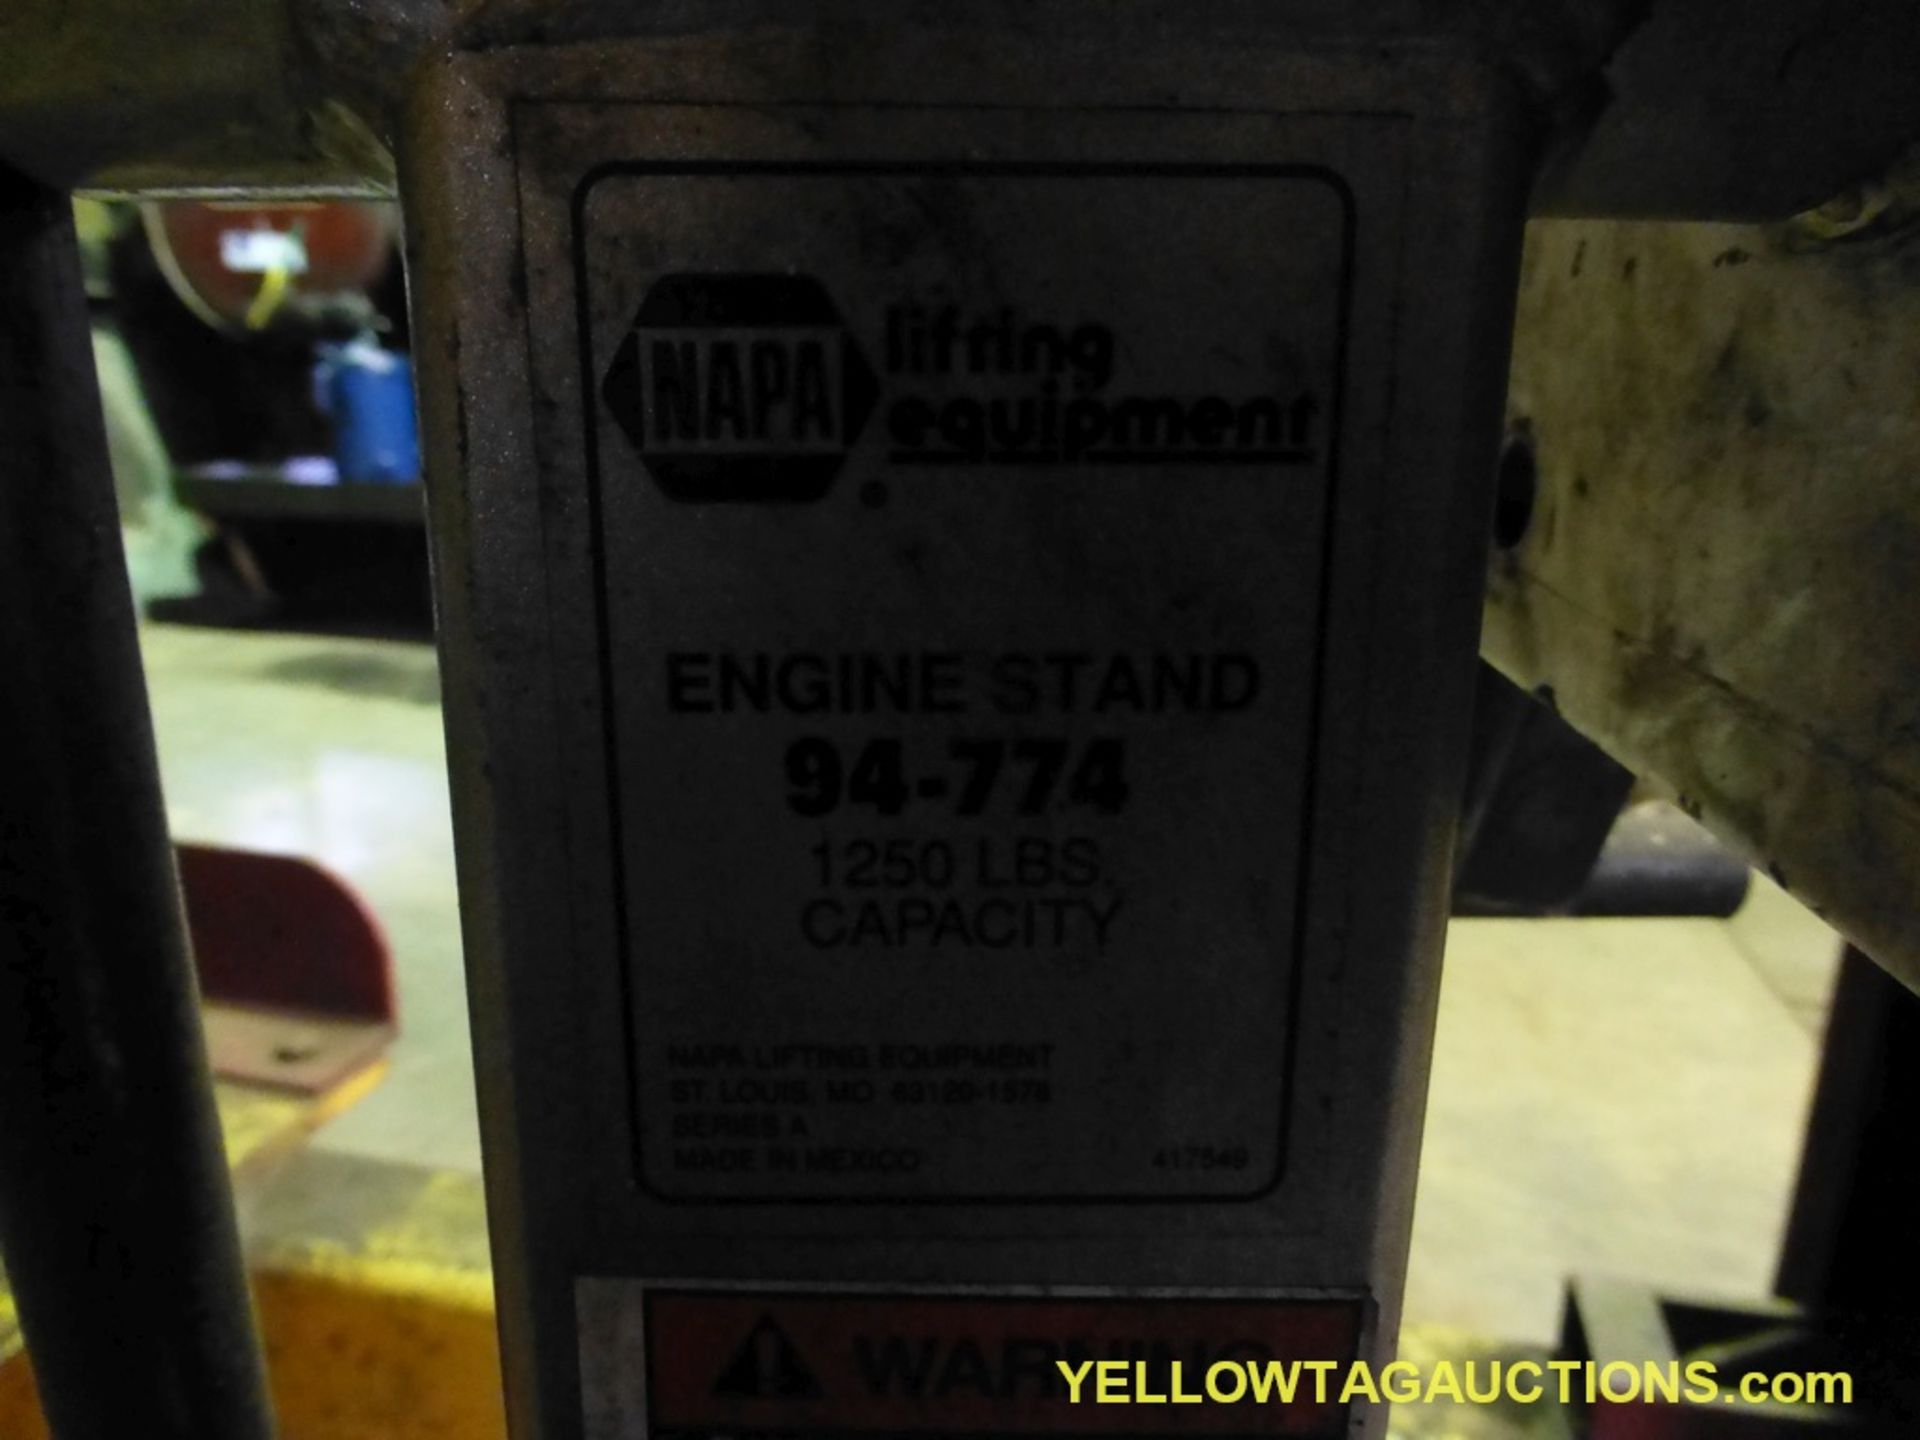 NAPA Engine Rotating Stand | Model No. 94-774; 1250 lbs Capacity - Image 4 of 4